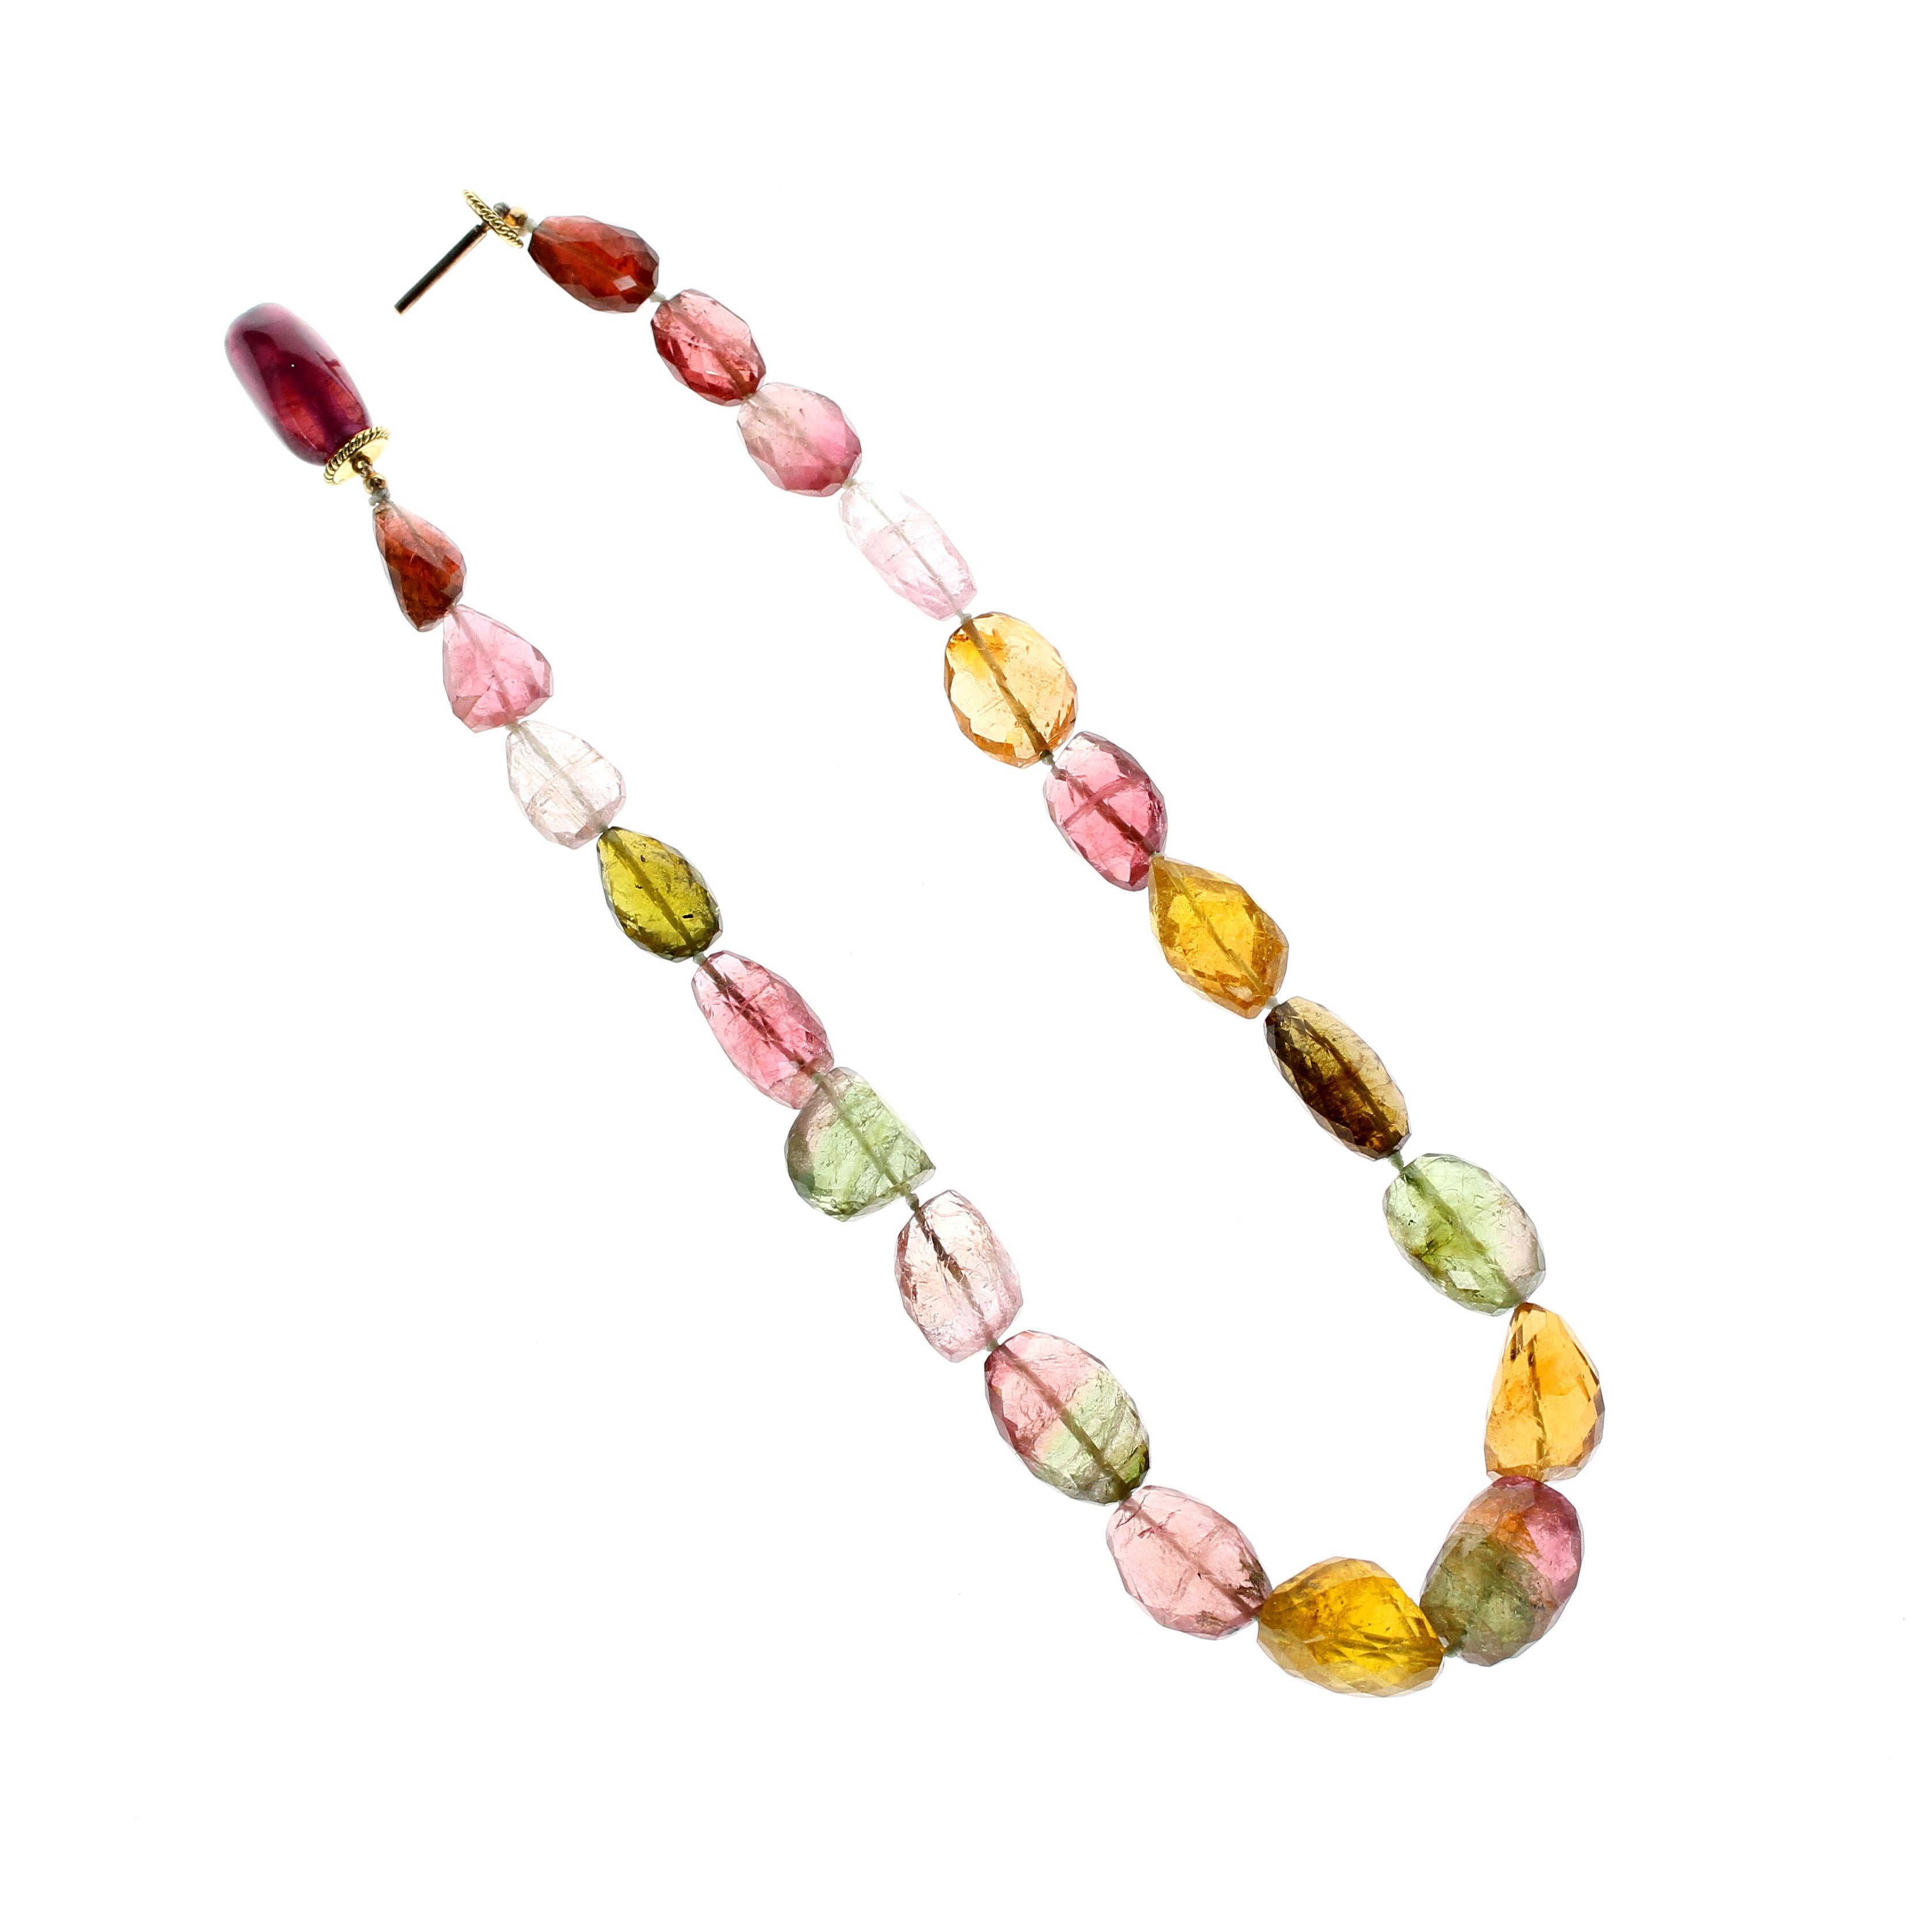 tourmaline bead necklace